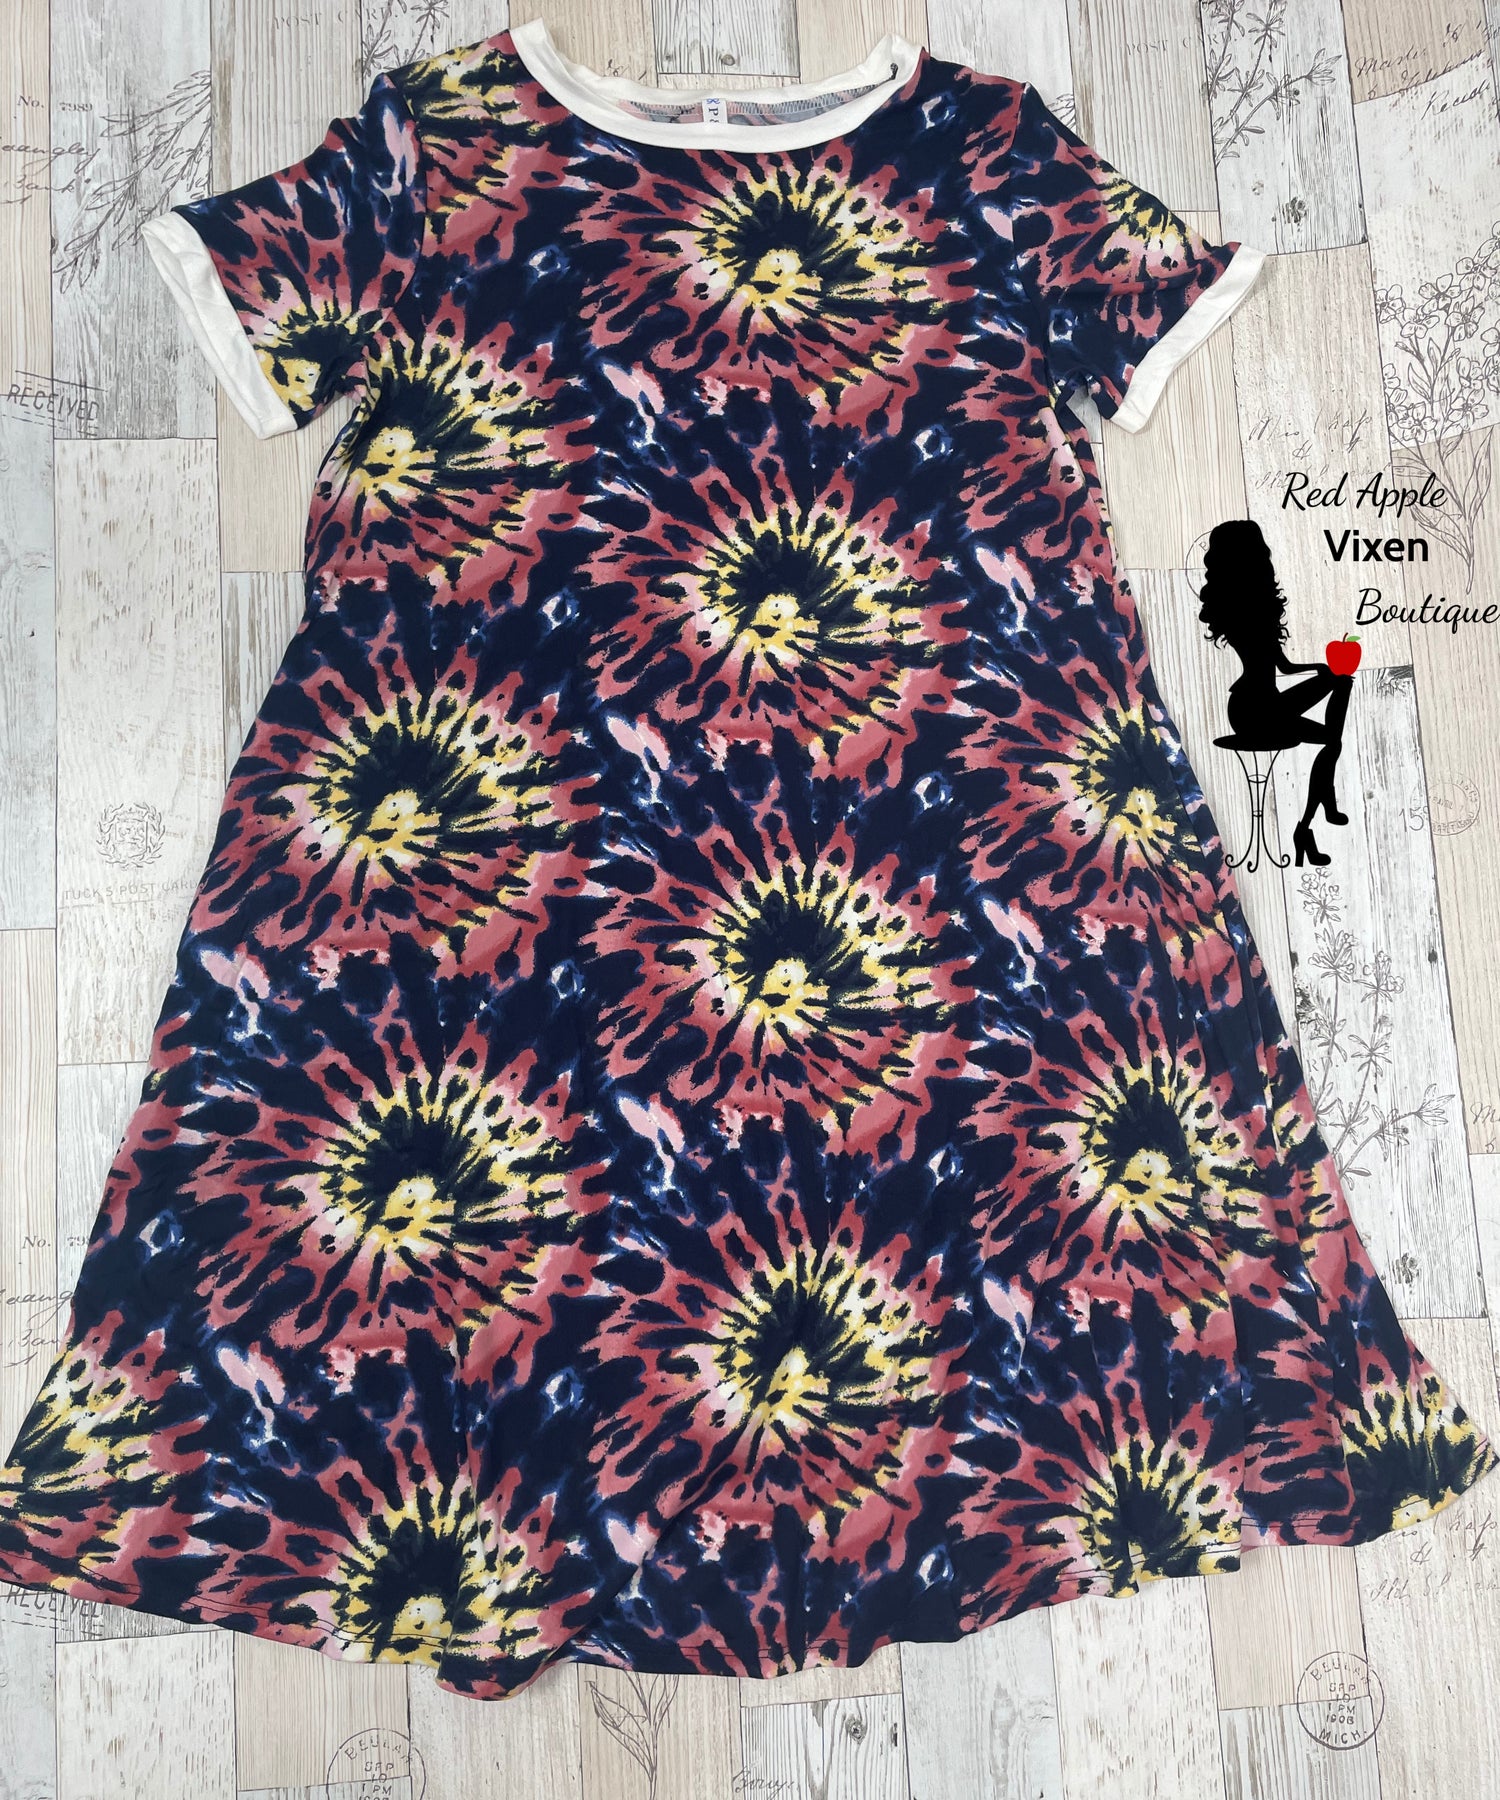 Tie Dye Print Dress with Pockets - Red Apple Vixen Boutique